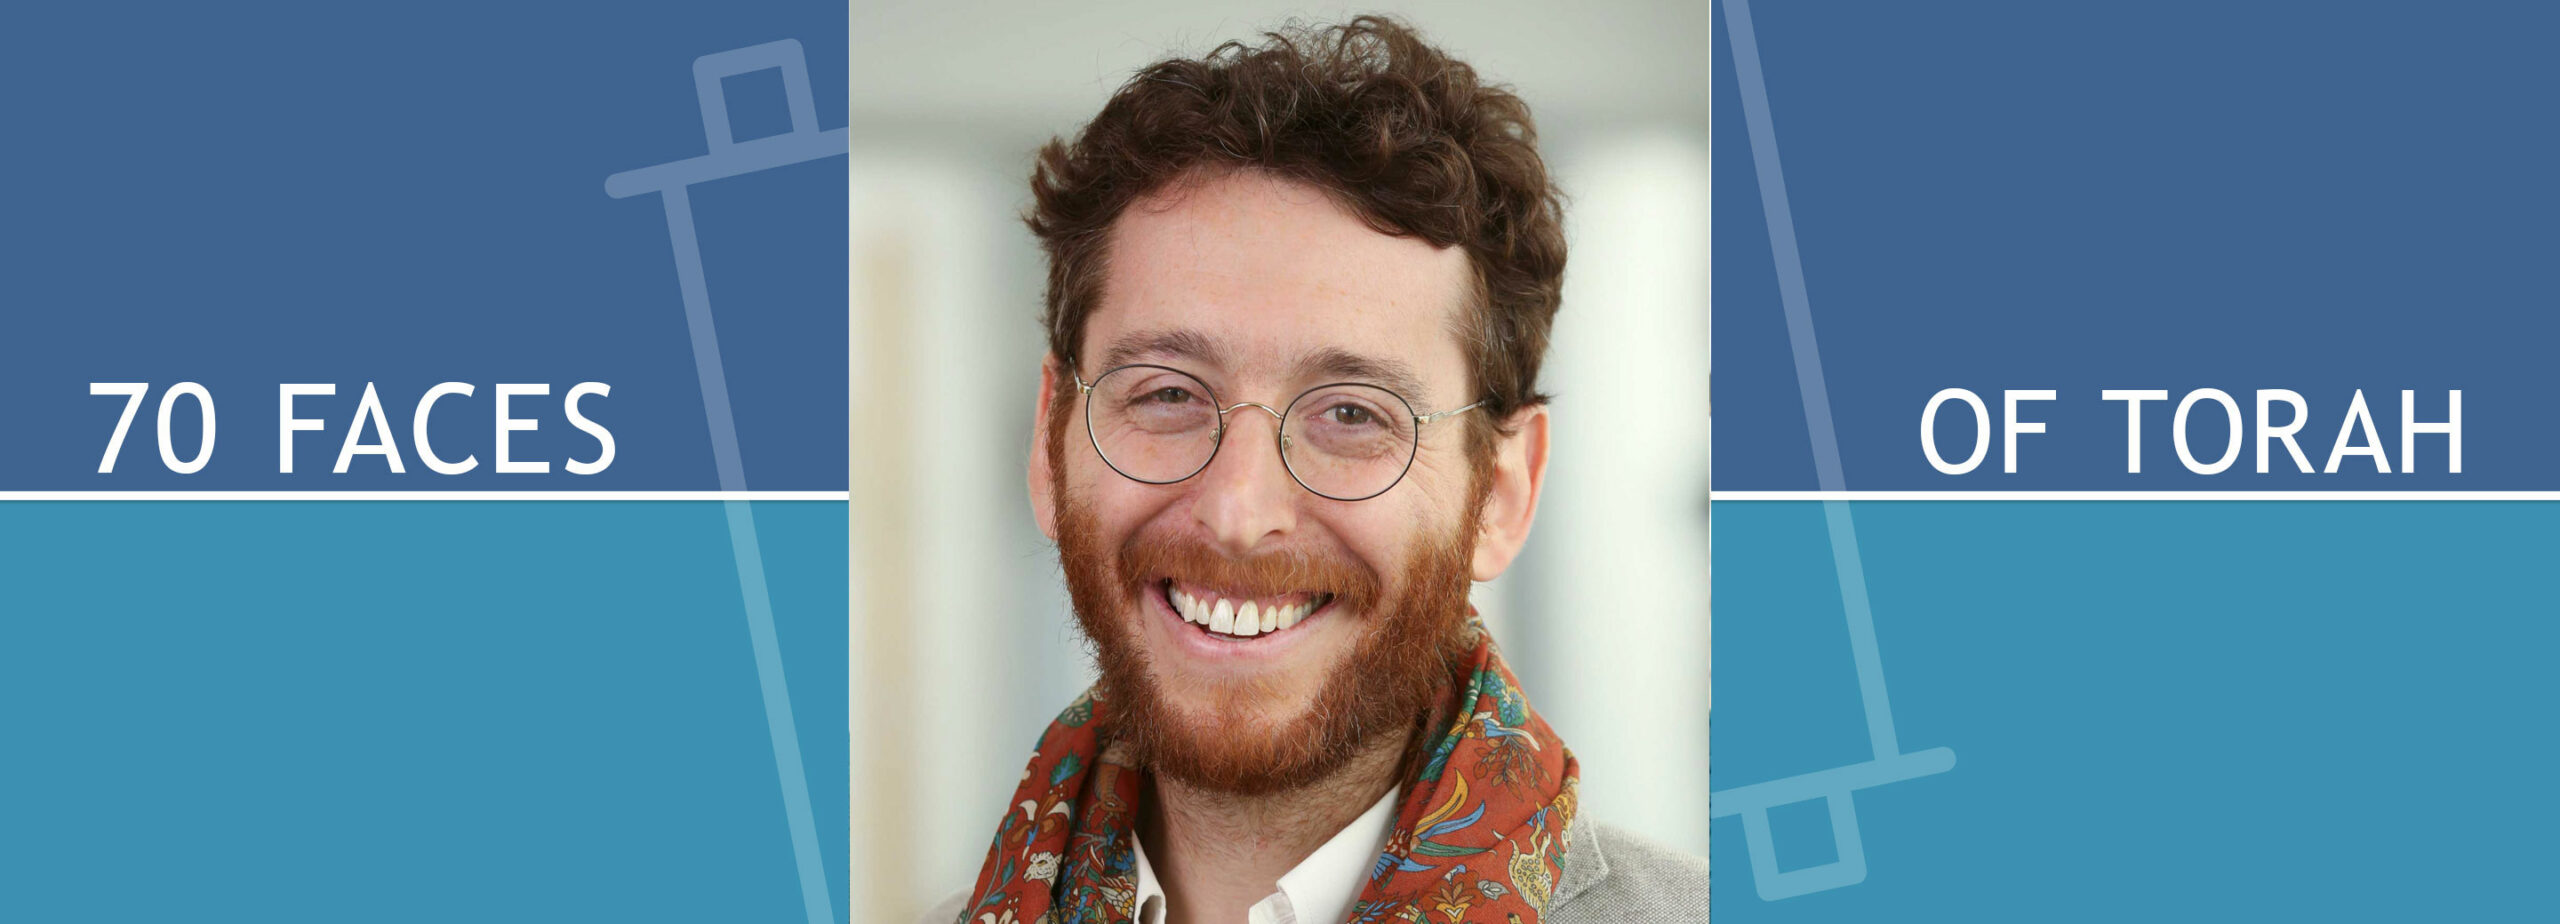 Rabbi Jordan Schuster